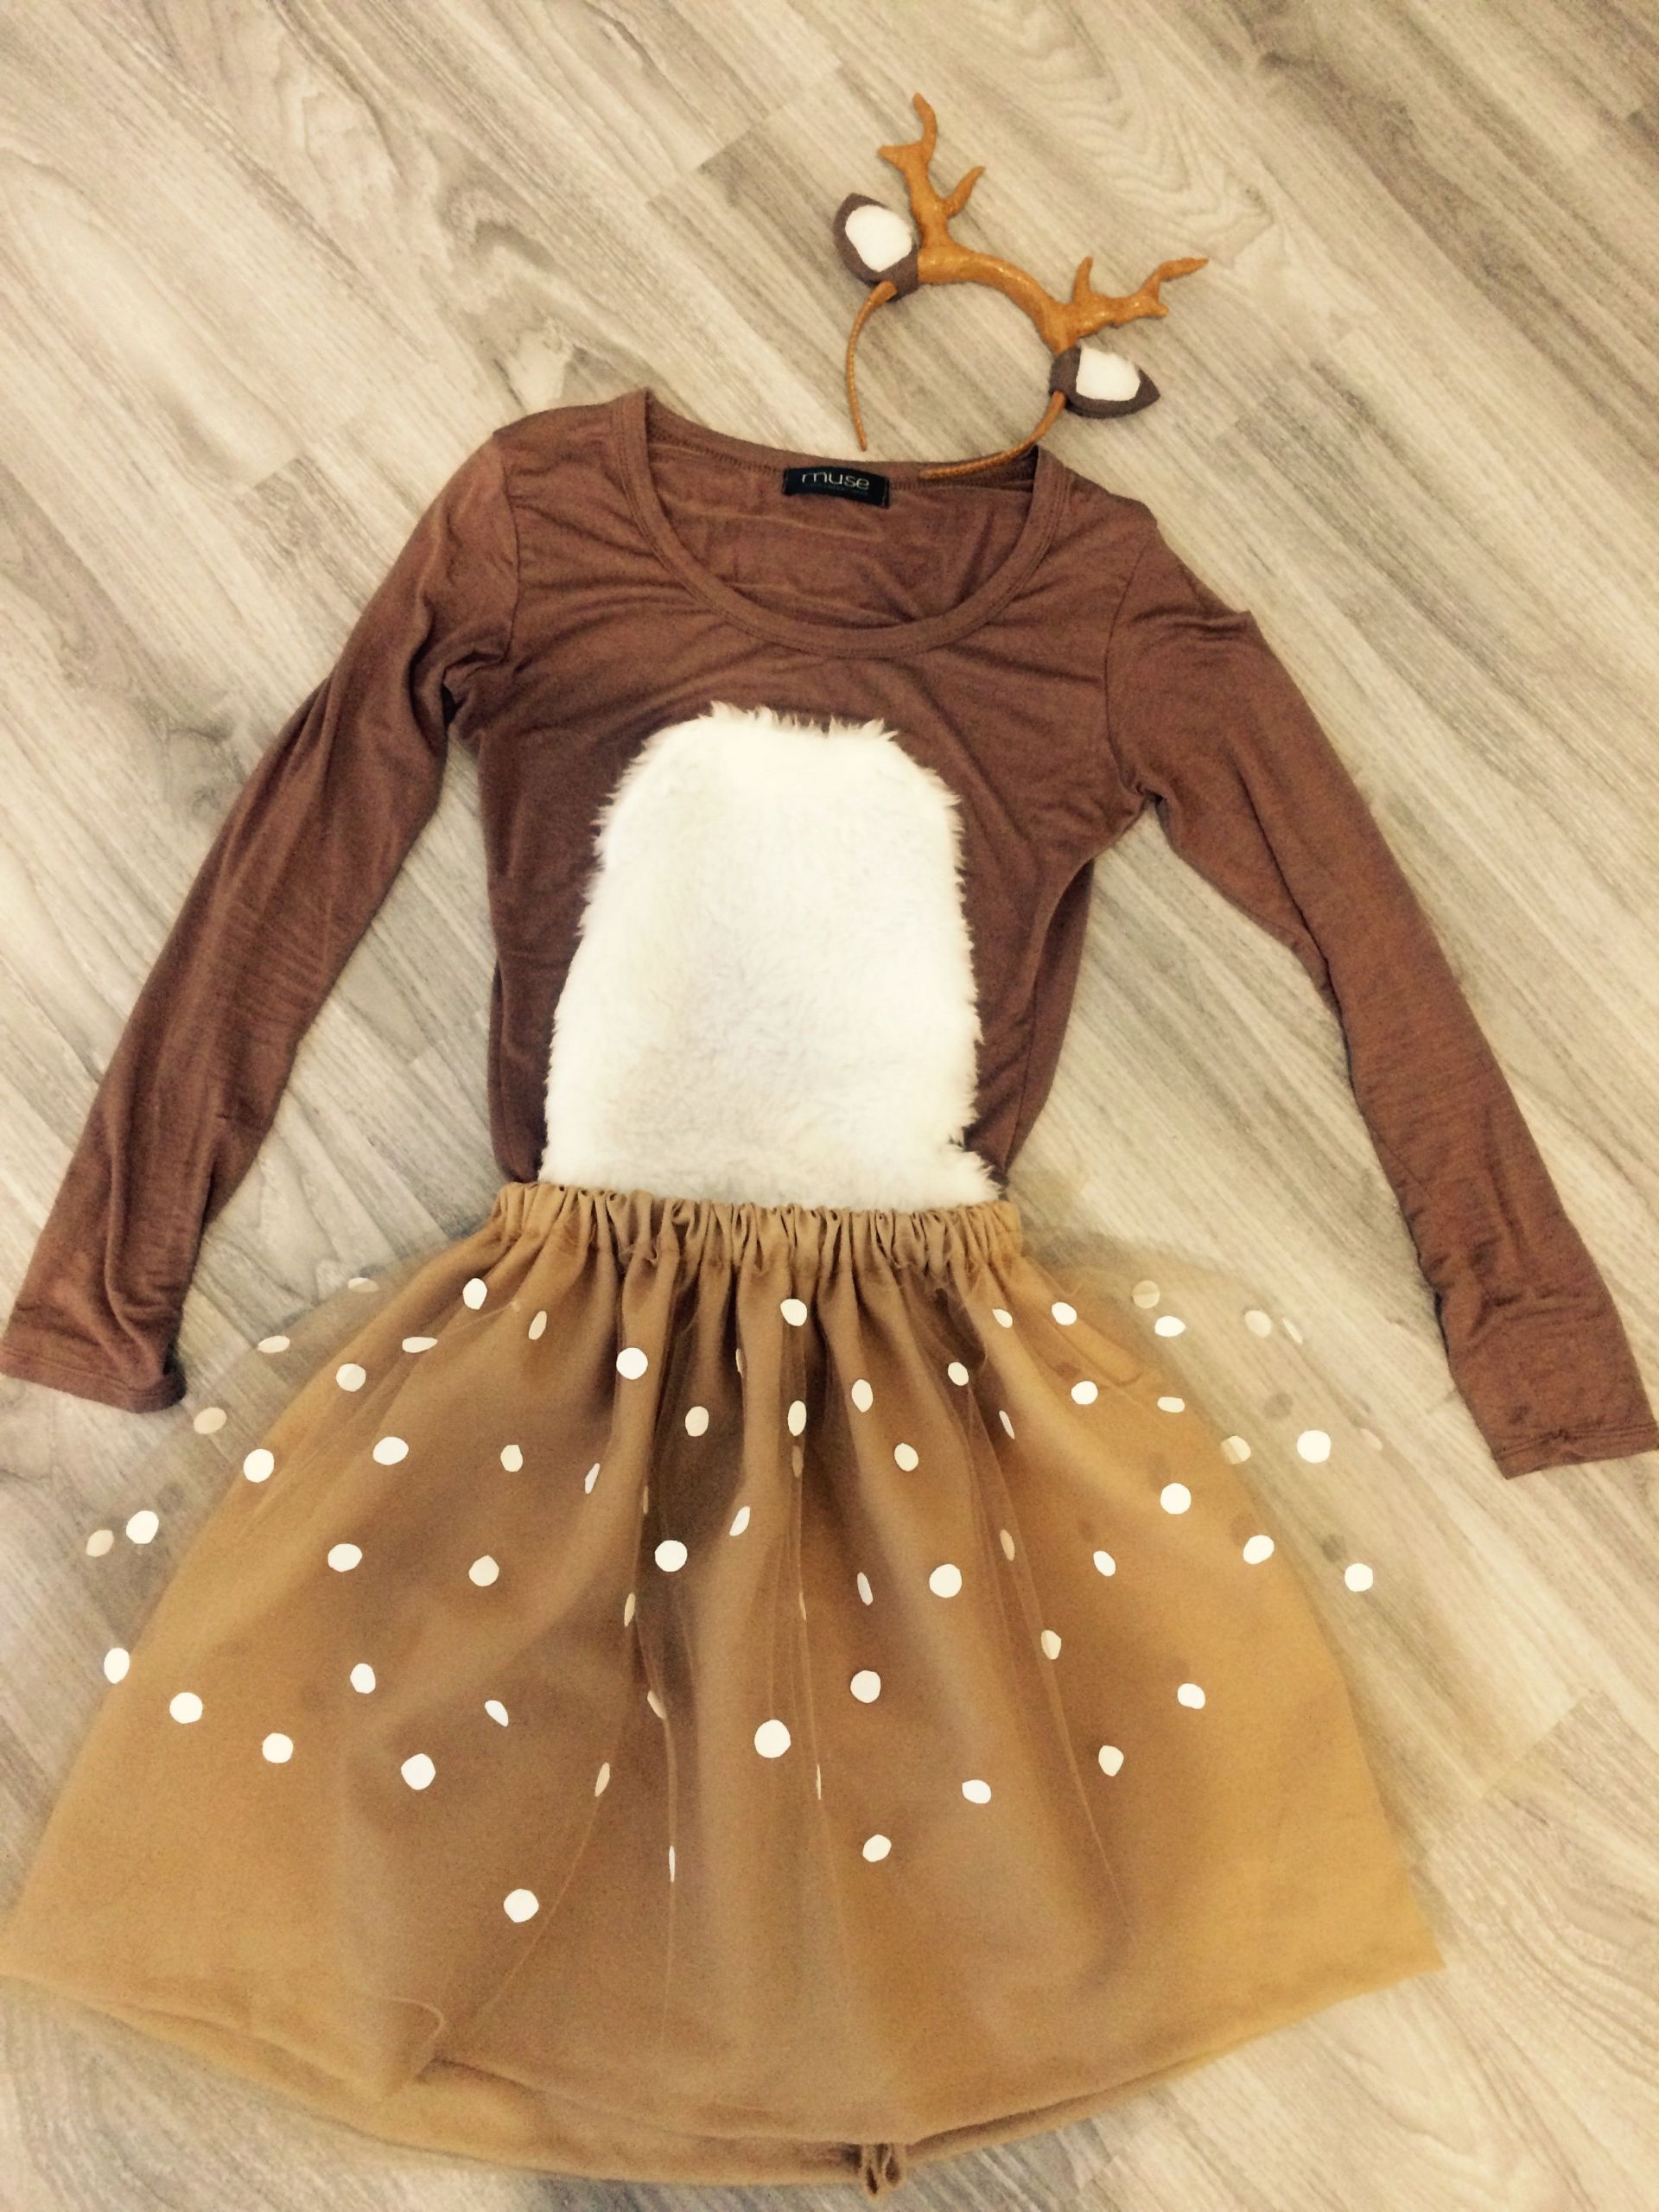 Toddler Deer Costume DIY
 Deer costume Shrek the Musical Pinterest